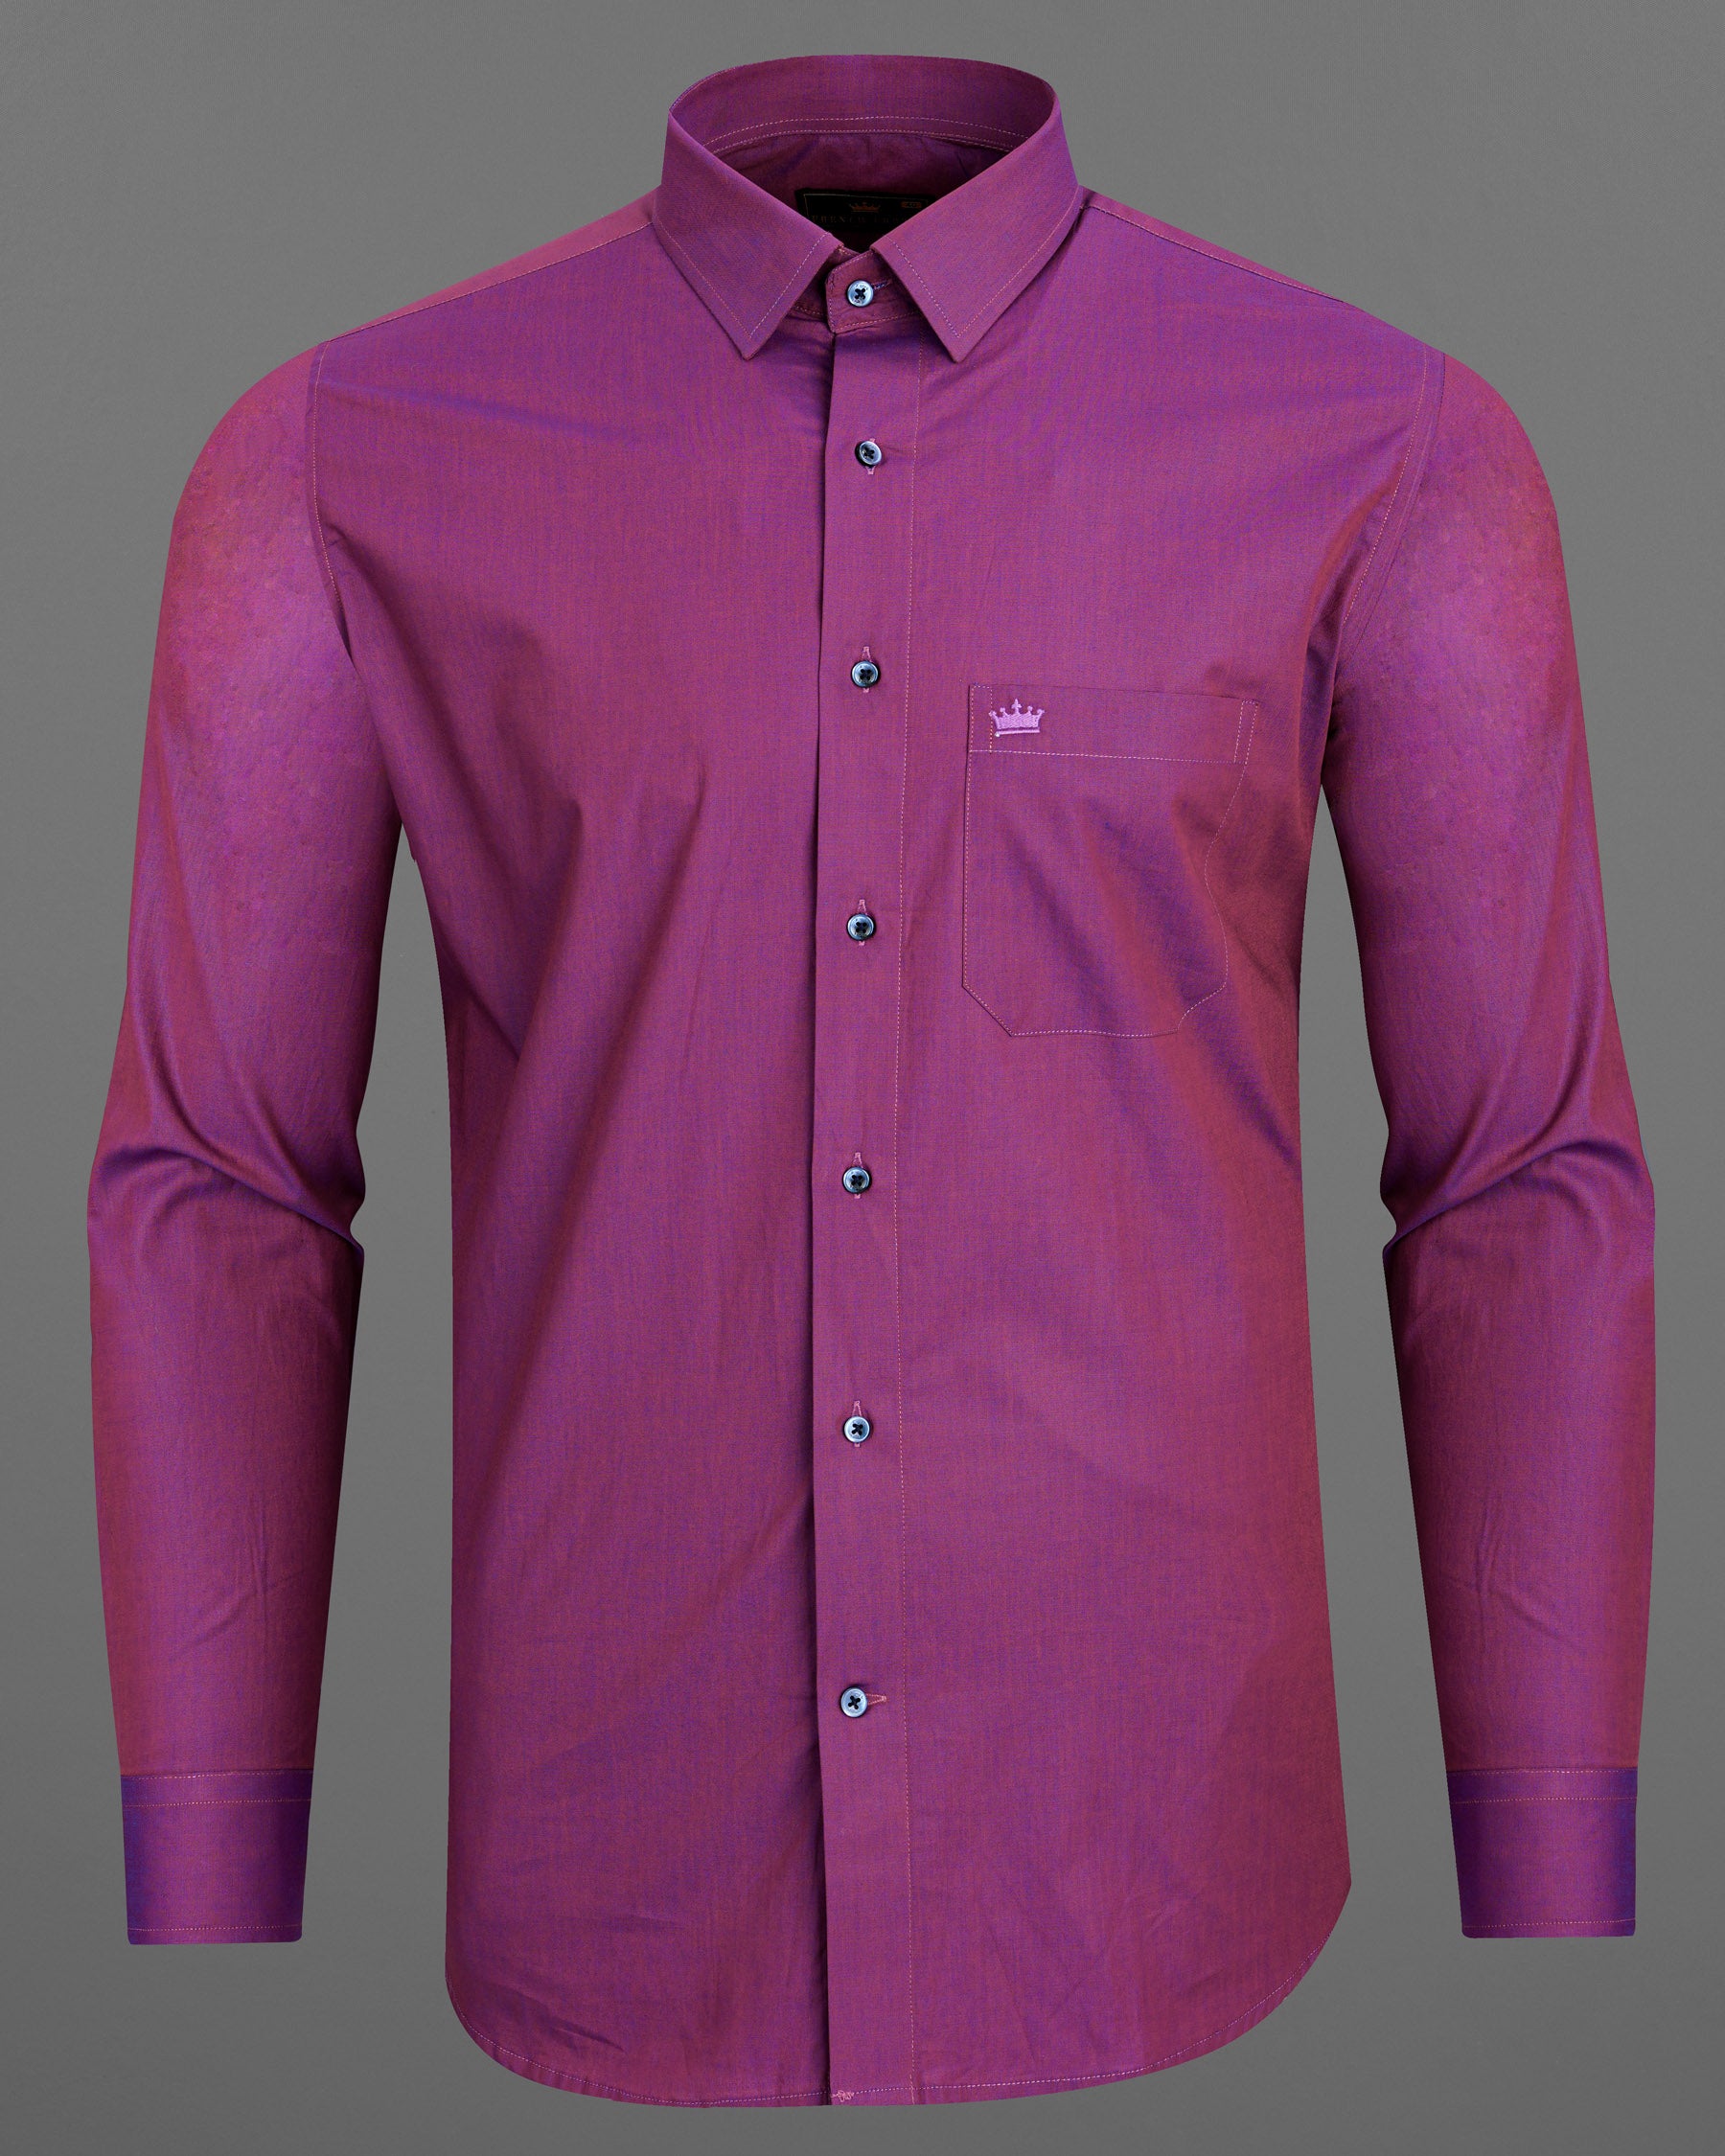 Byzantium Purple Chambray Textured Two-Tone Premium Cotton Shirt 7697-BLE-38, 7697-BLE-H-38, 7697-BLE-39,7697-BLE-H-39, 7697-BLE-40, 7697-BLE-H-40, 7697-BLE-42, 7697-BLE-H-42, 7697-BLE-44, 7697-BLE-H-44, 7697-BLE-46, 7697-BLE-H-46, 7697-BLE-48, 7697-BLE-H-48, 7697-BLE-50, 7697-BLE-H-50, 7697-BLE-52, 7697-BLE-H-52